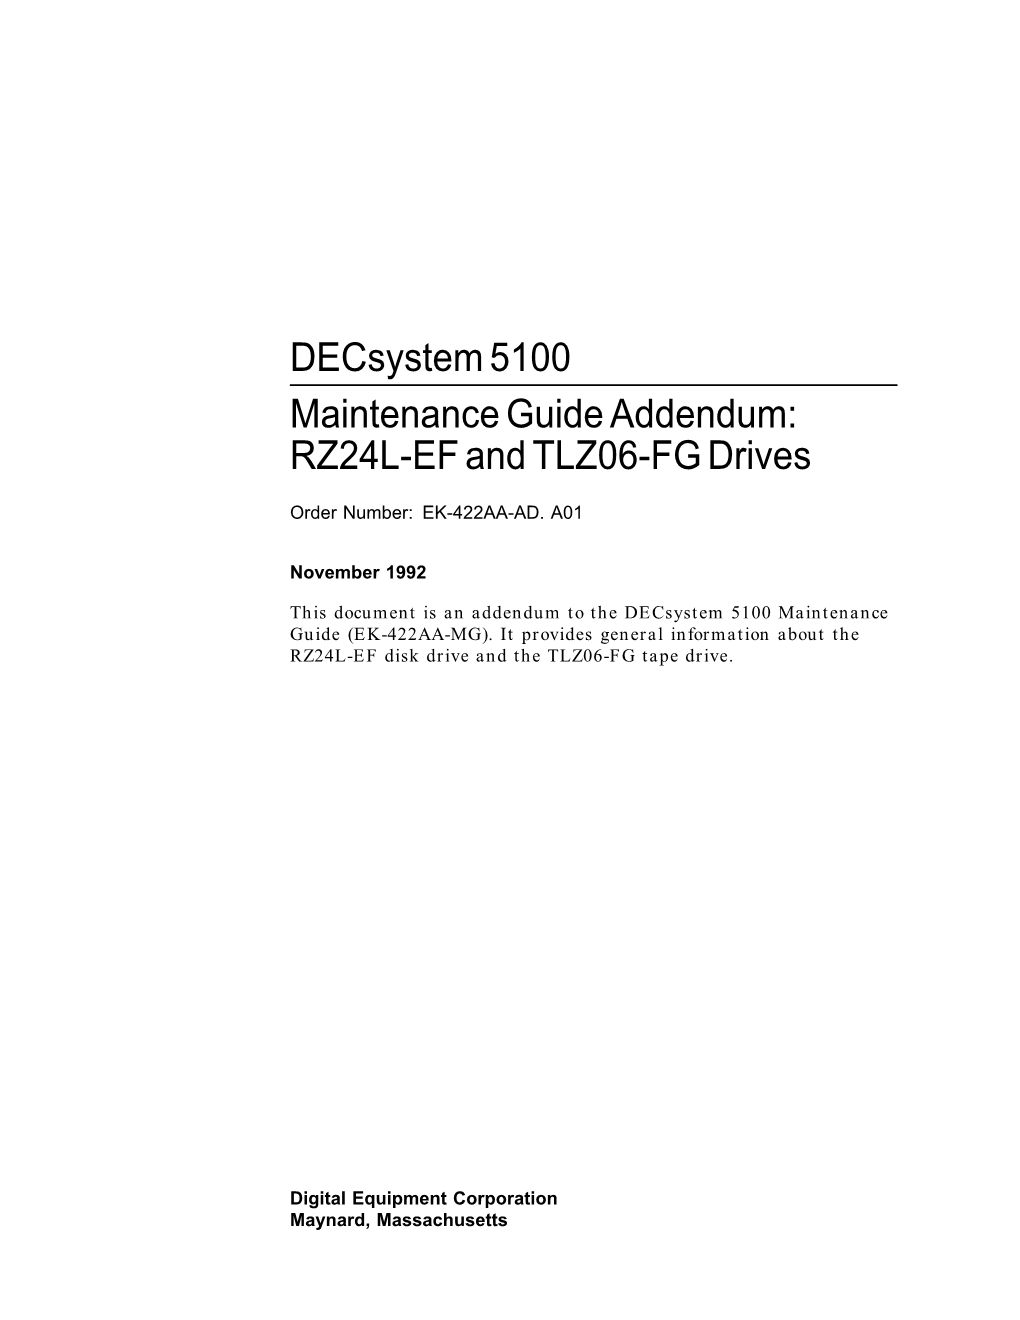 Decsystem 5100 Maint Guide Addendum: RZ24L-EF & TLZ06-FG